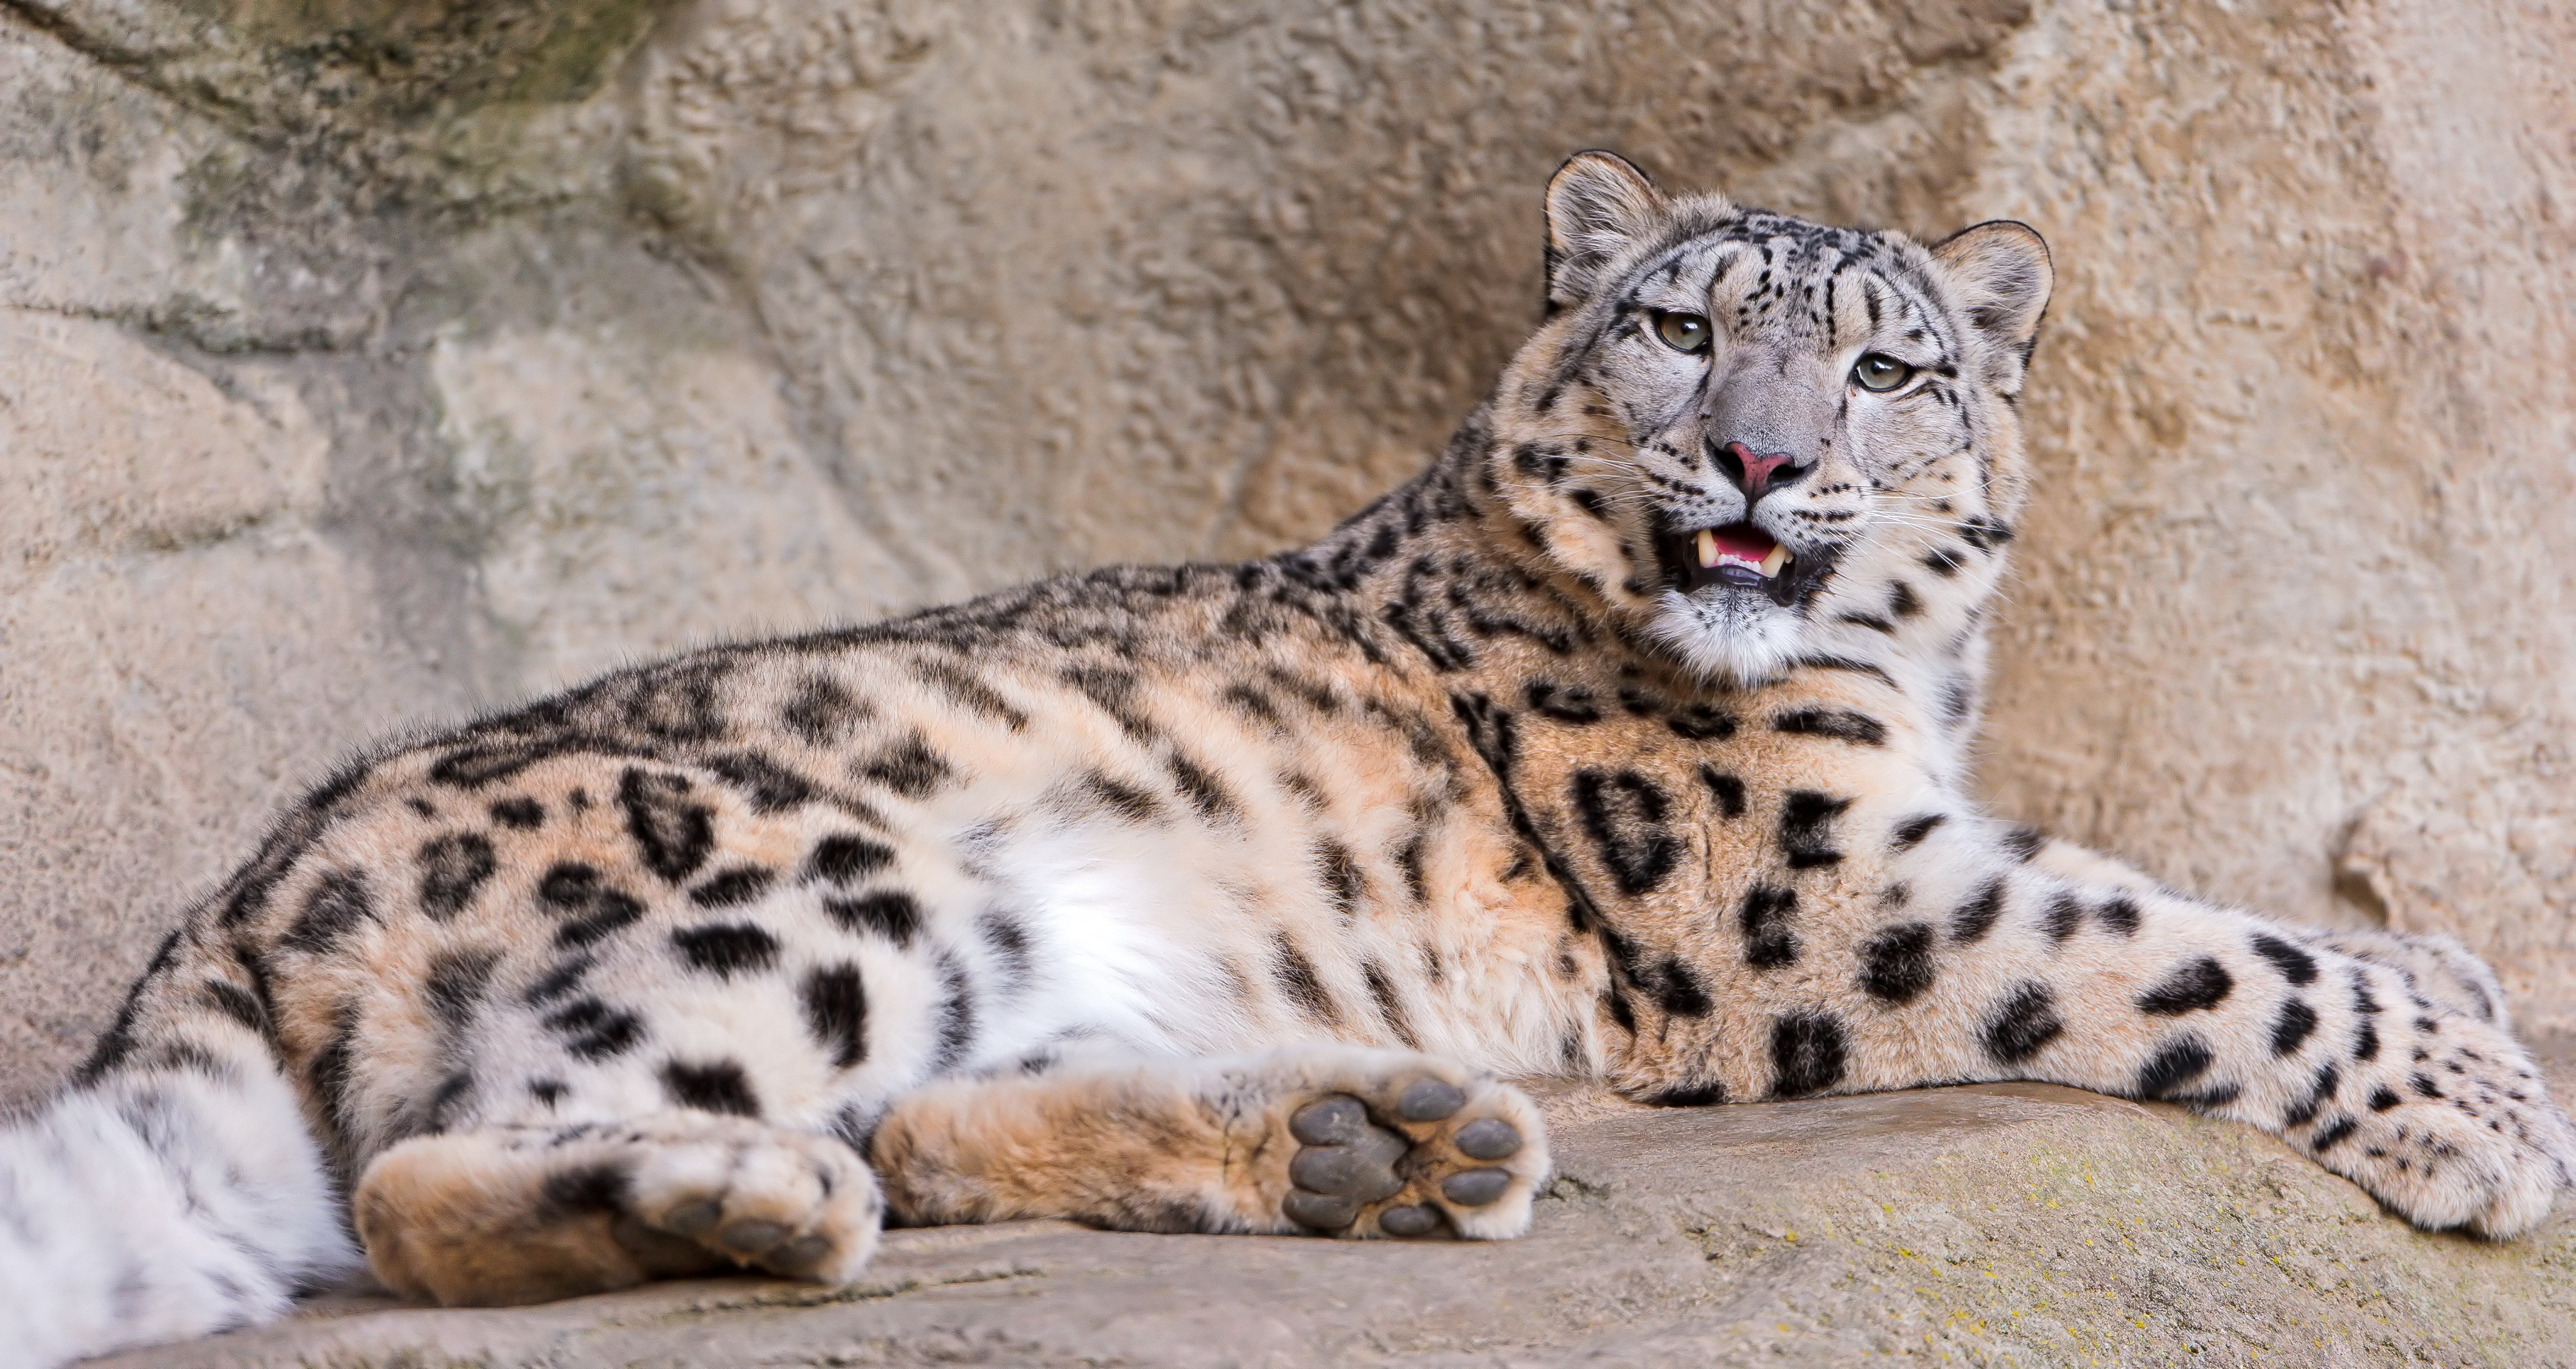 Image: Cat, predator, snow leopard, rest, look, stone